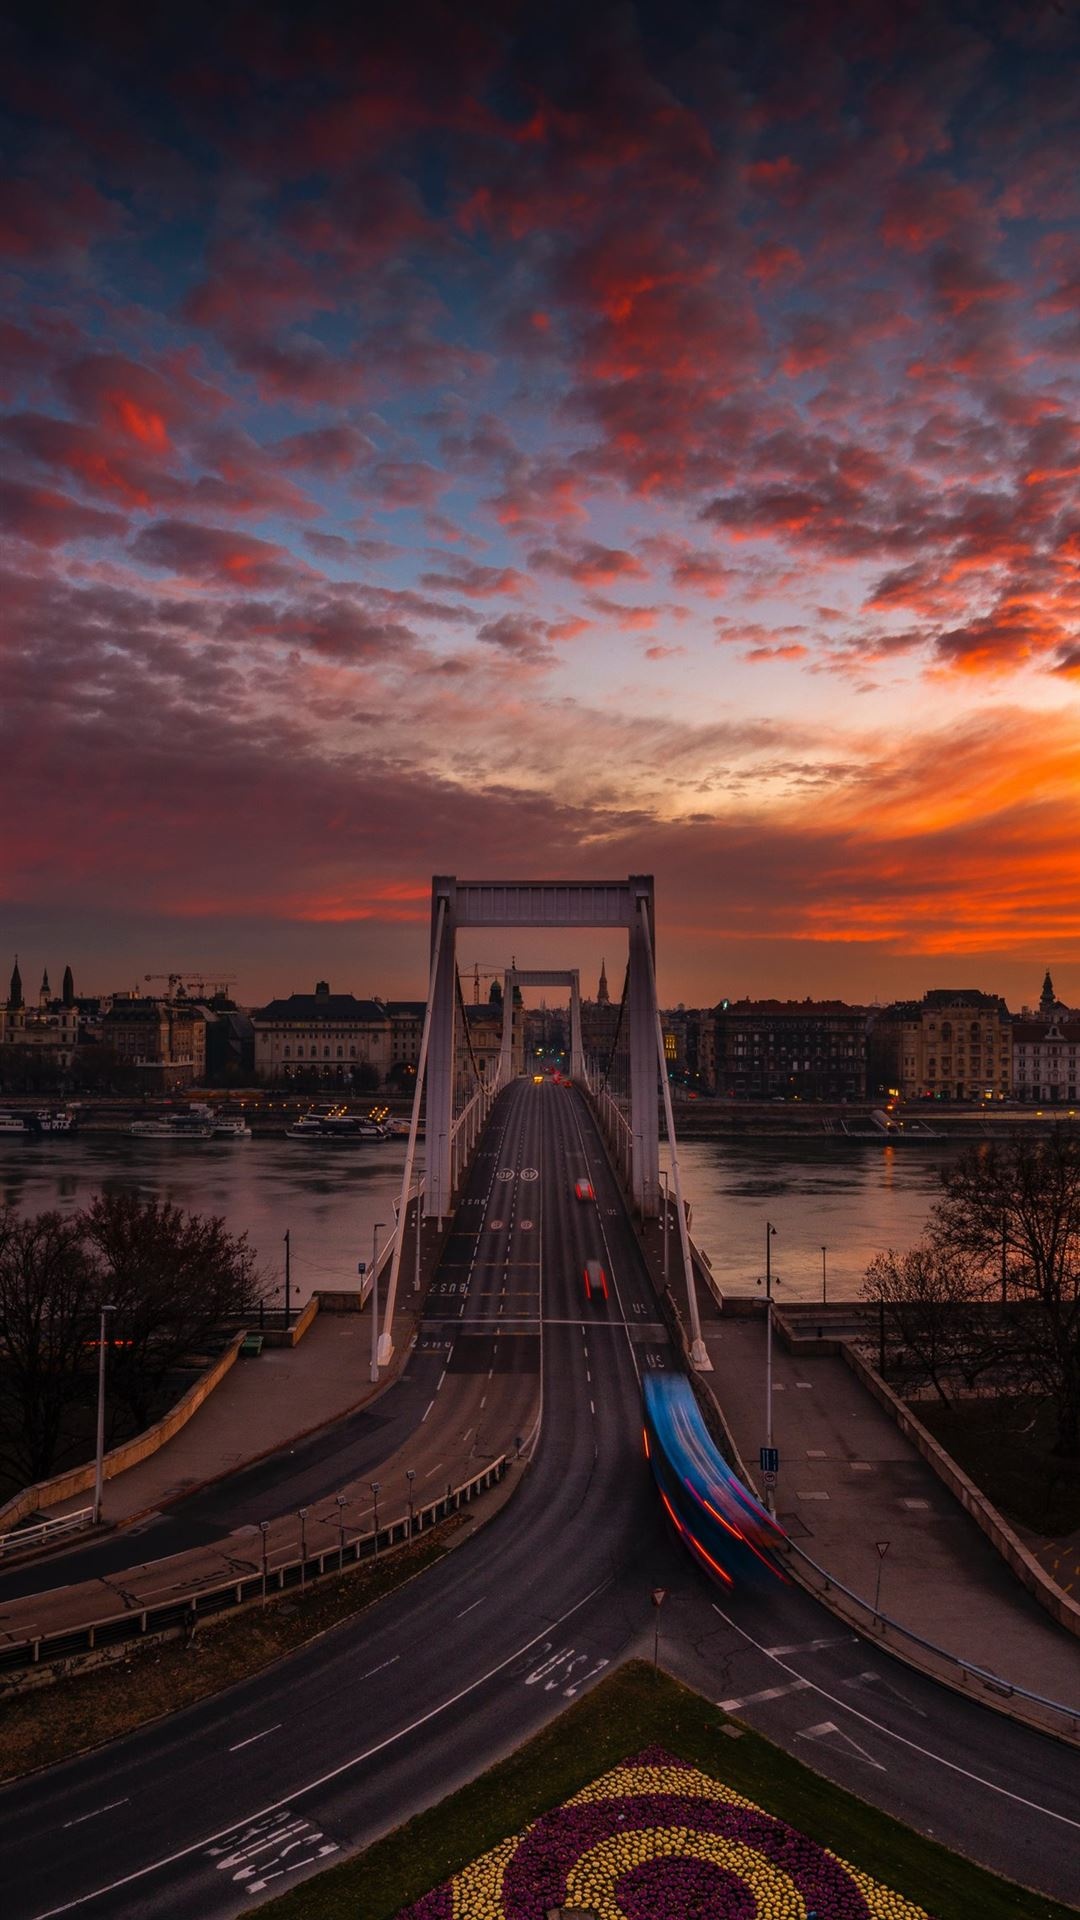 Hungary: A well-developed wine tourism industry, Elisabeth Bridge. 1080x1920 Full HD Wallpaper.